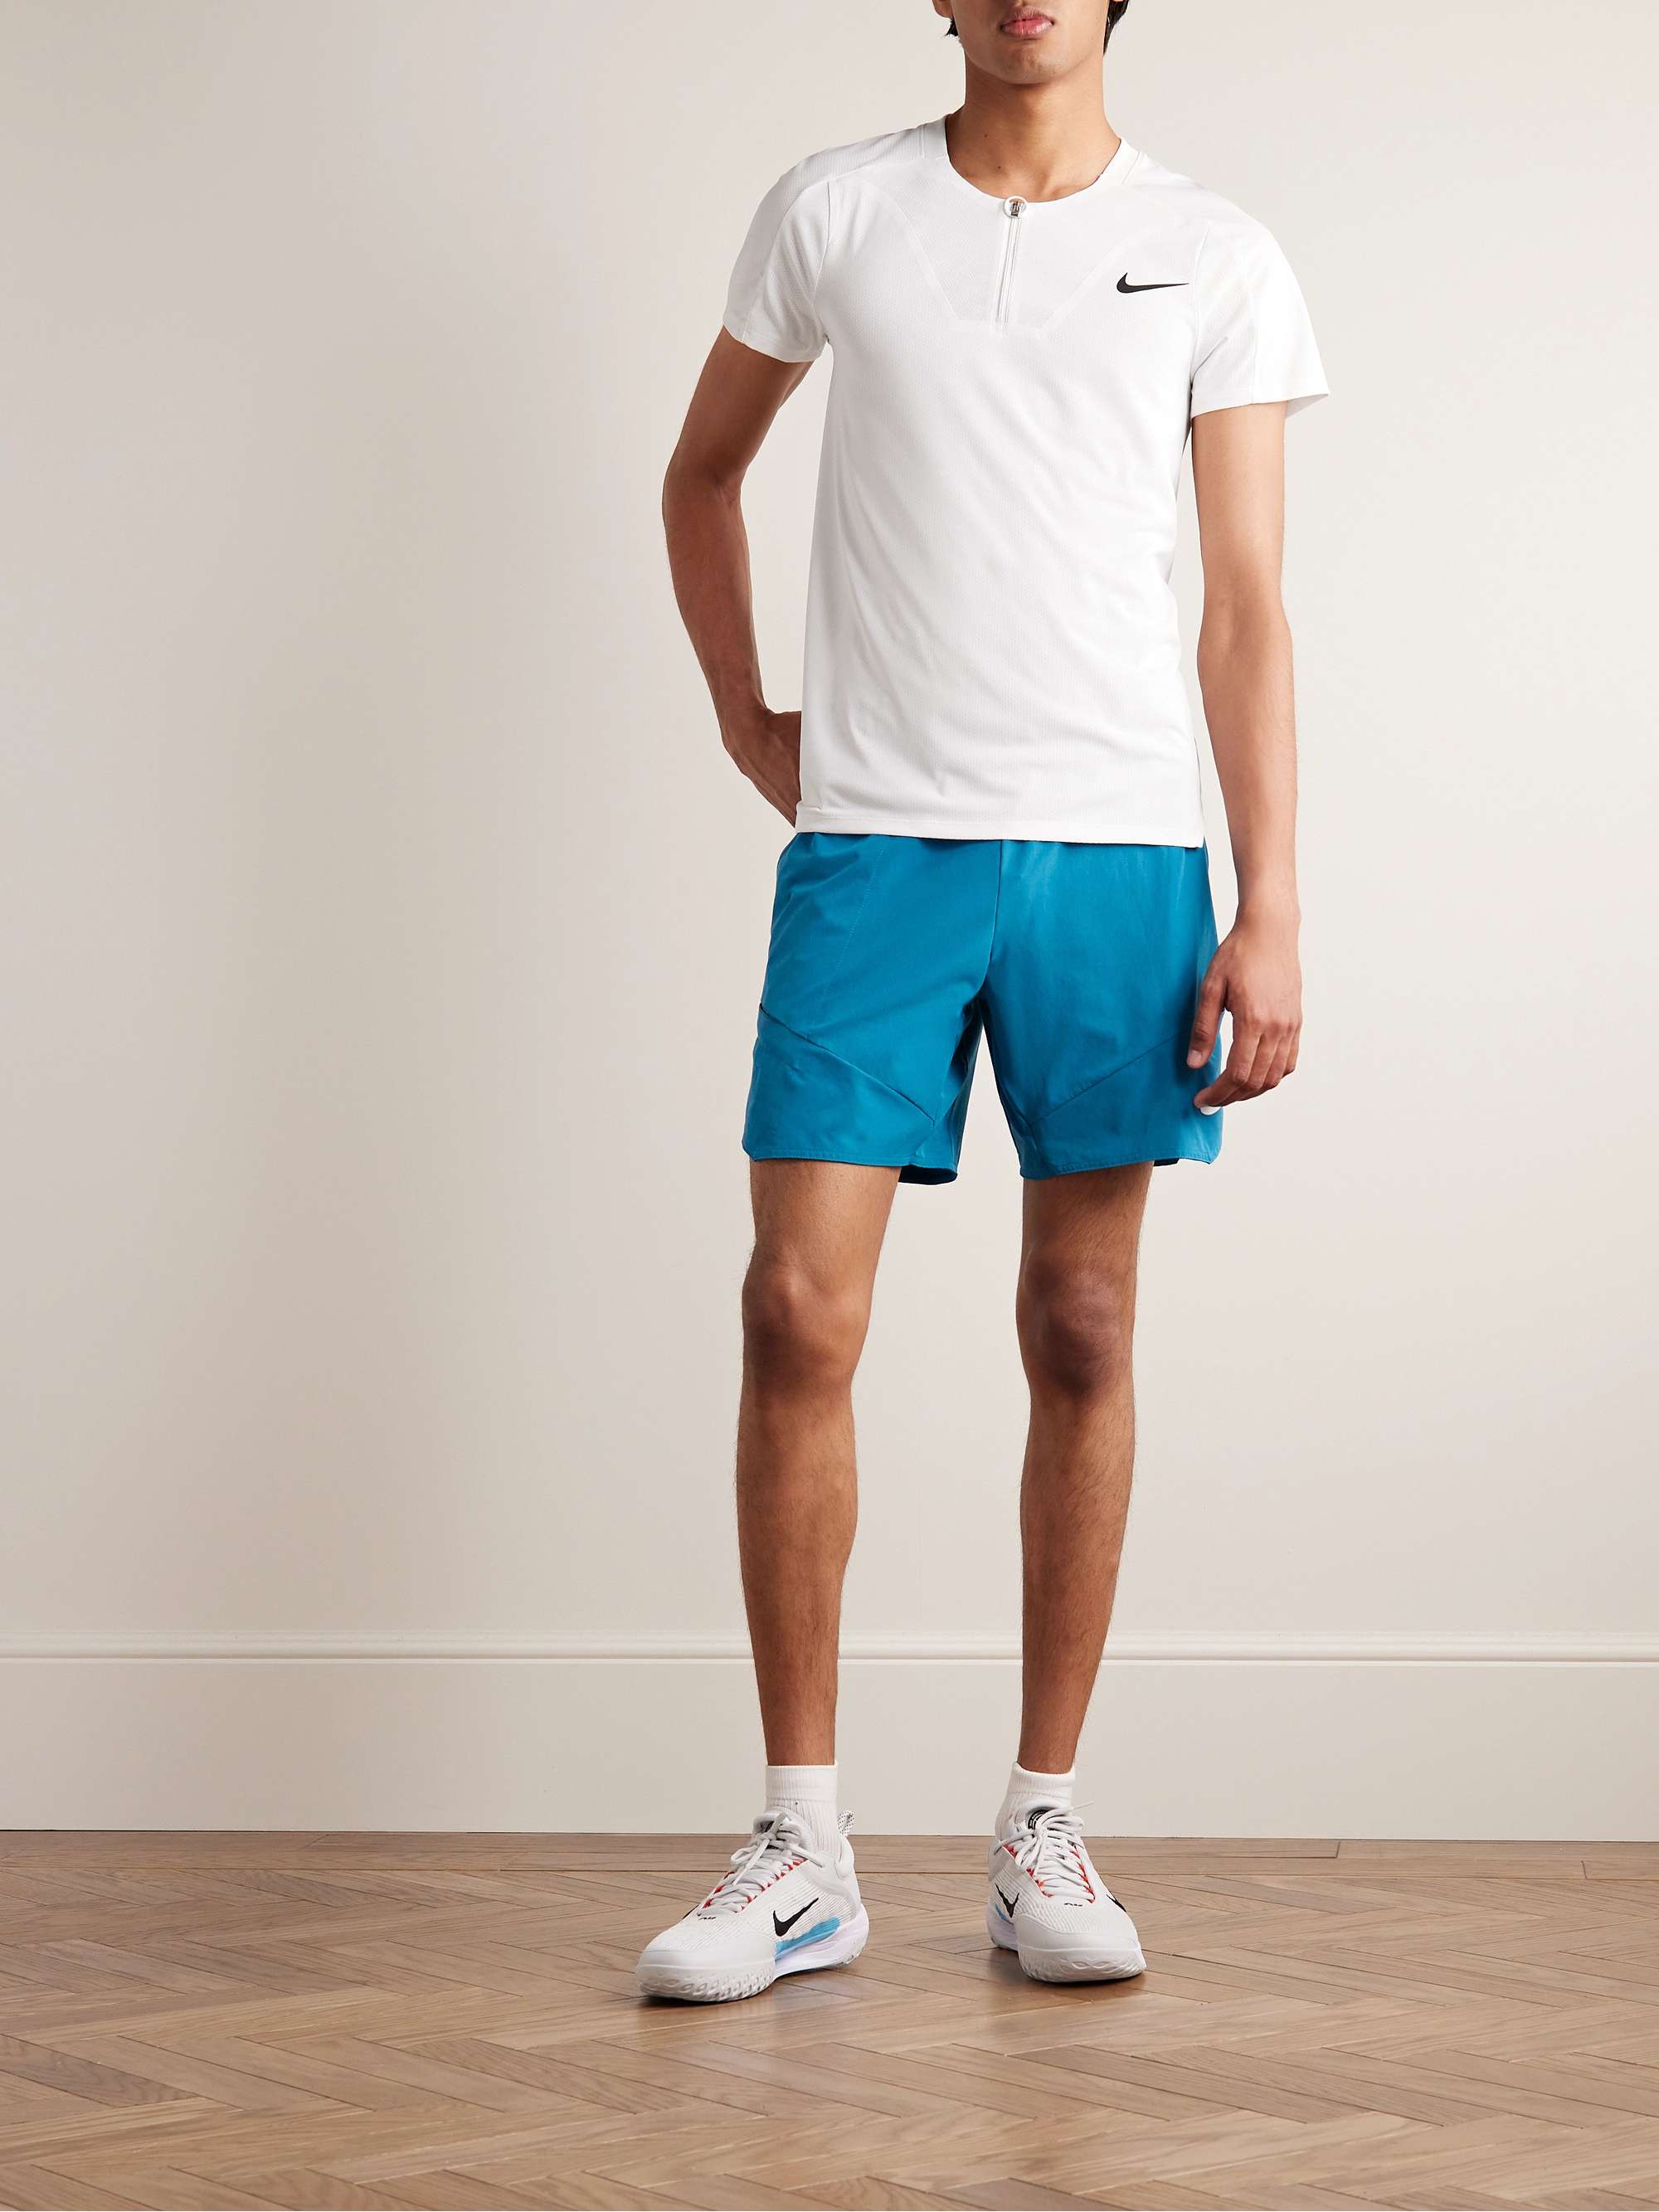 Tee-shirt tennis homme Nike Court Training - Collection Wimbledon